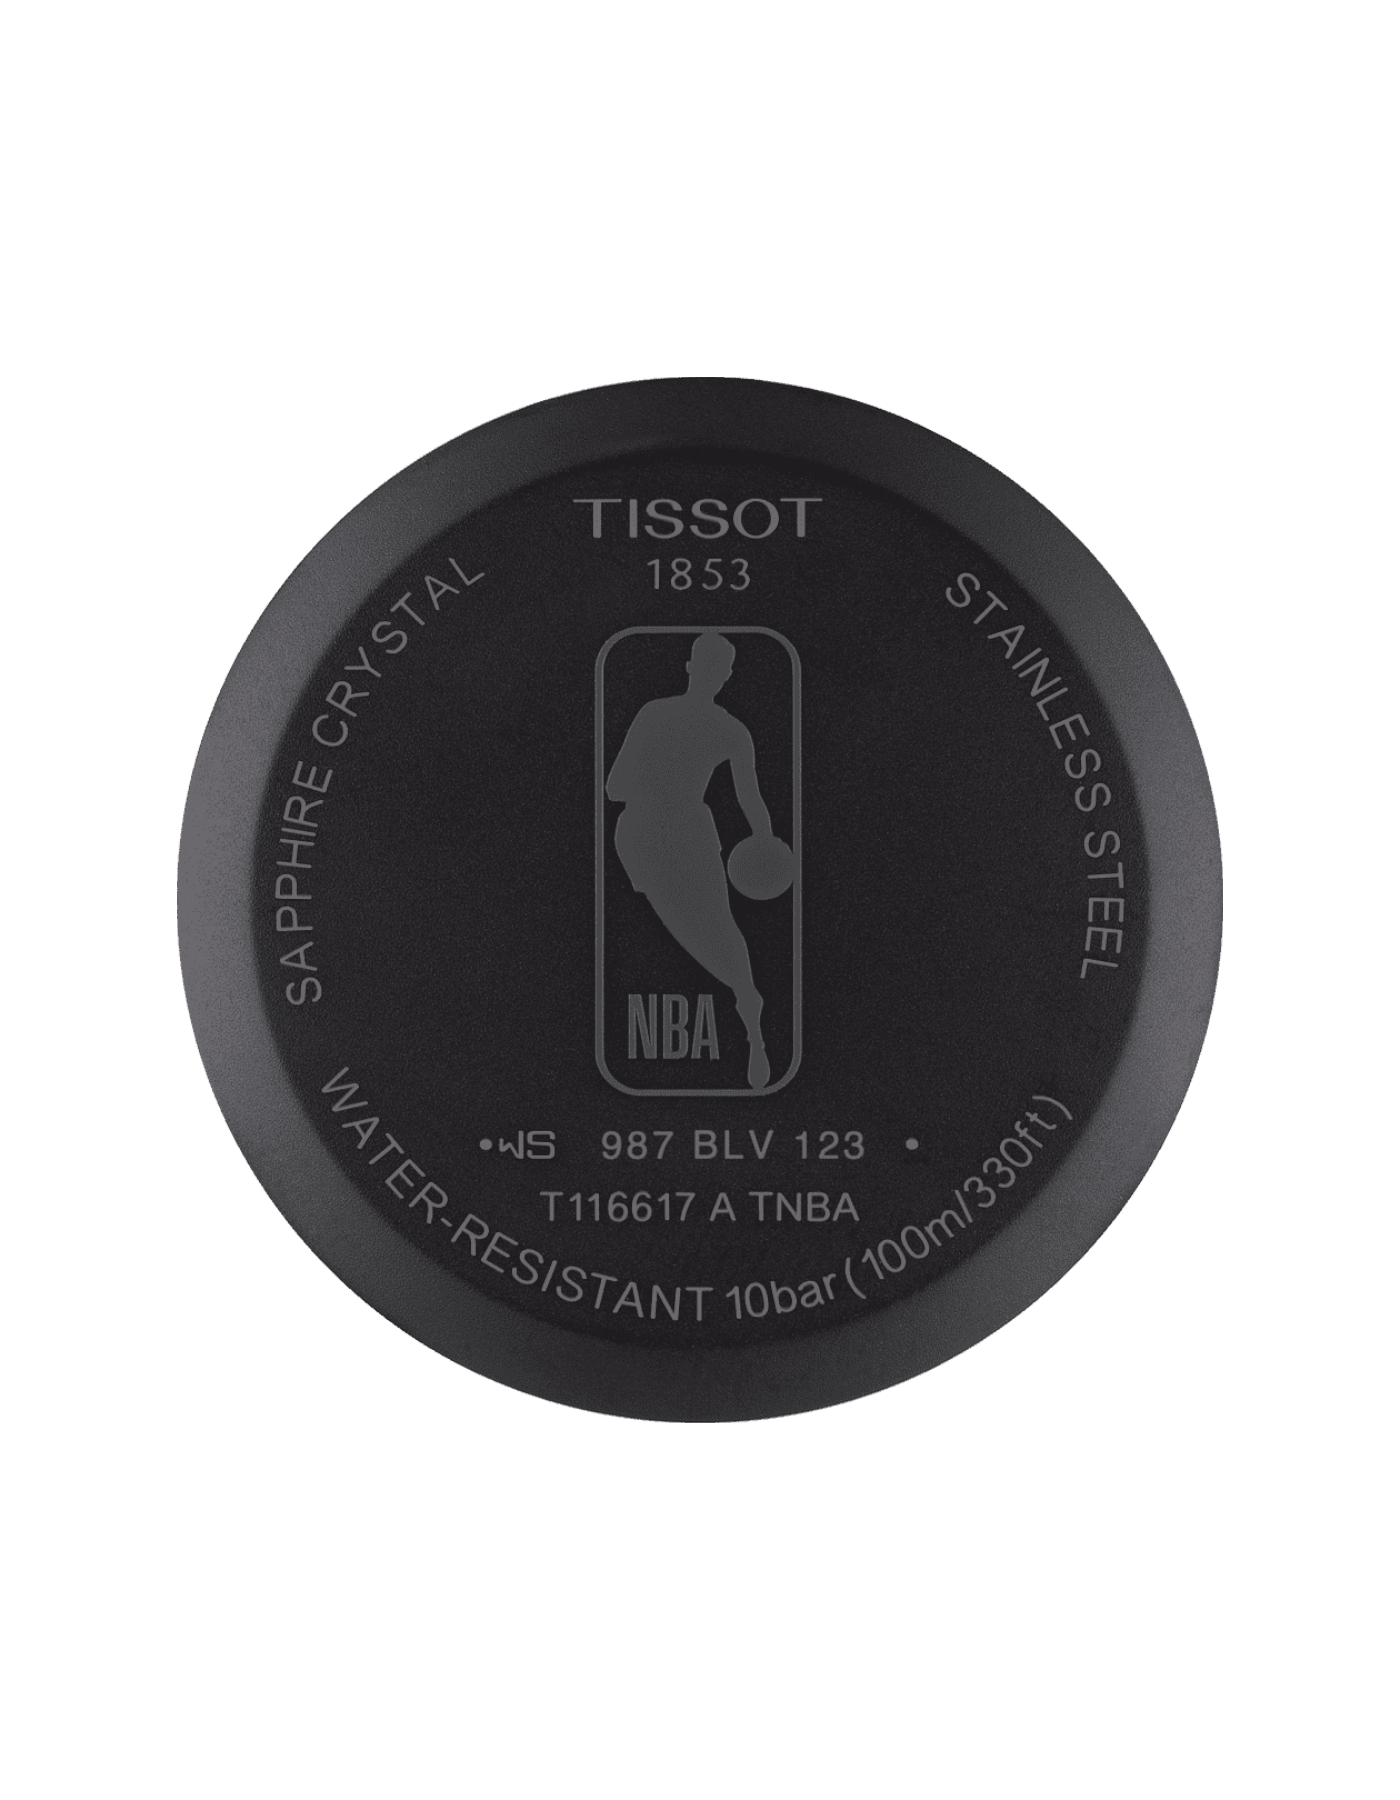 TISSOT CHRONO XL NBA TEAMS SPECIAL SAN ANTONIO SPURS EDITION